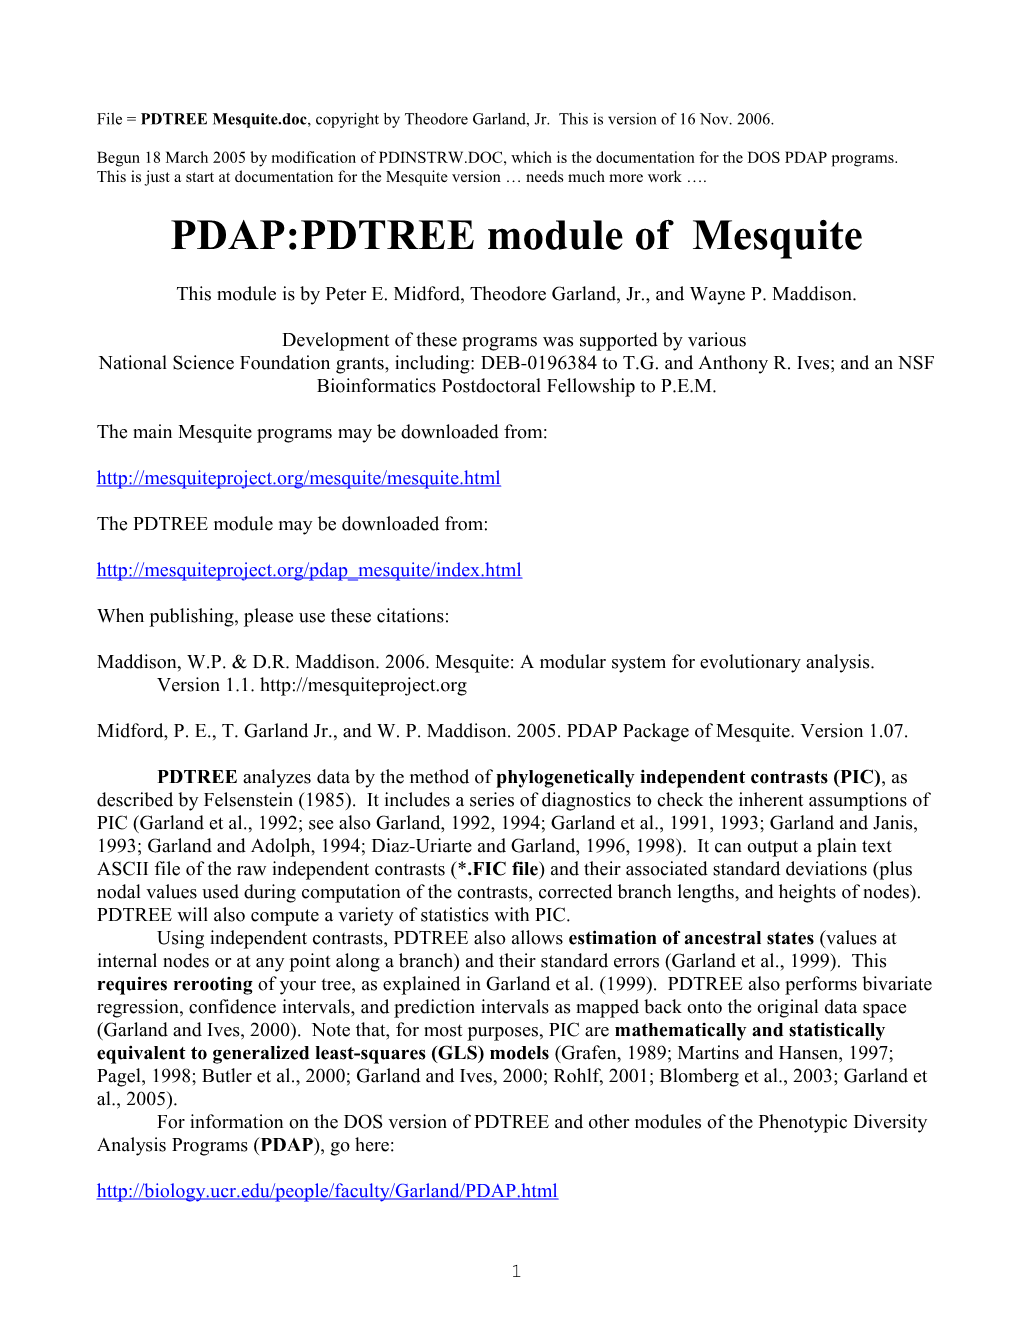 PDAP:PDTREE Module of Mesquite